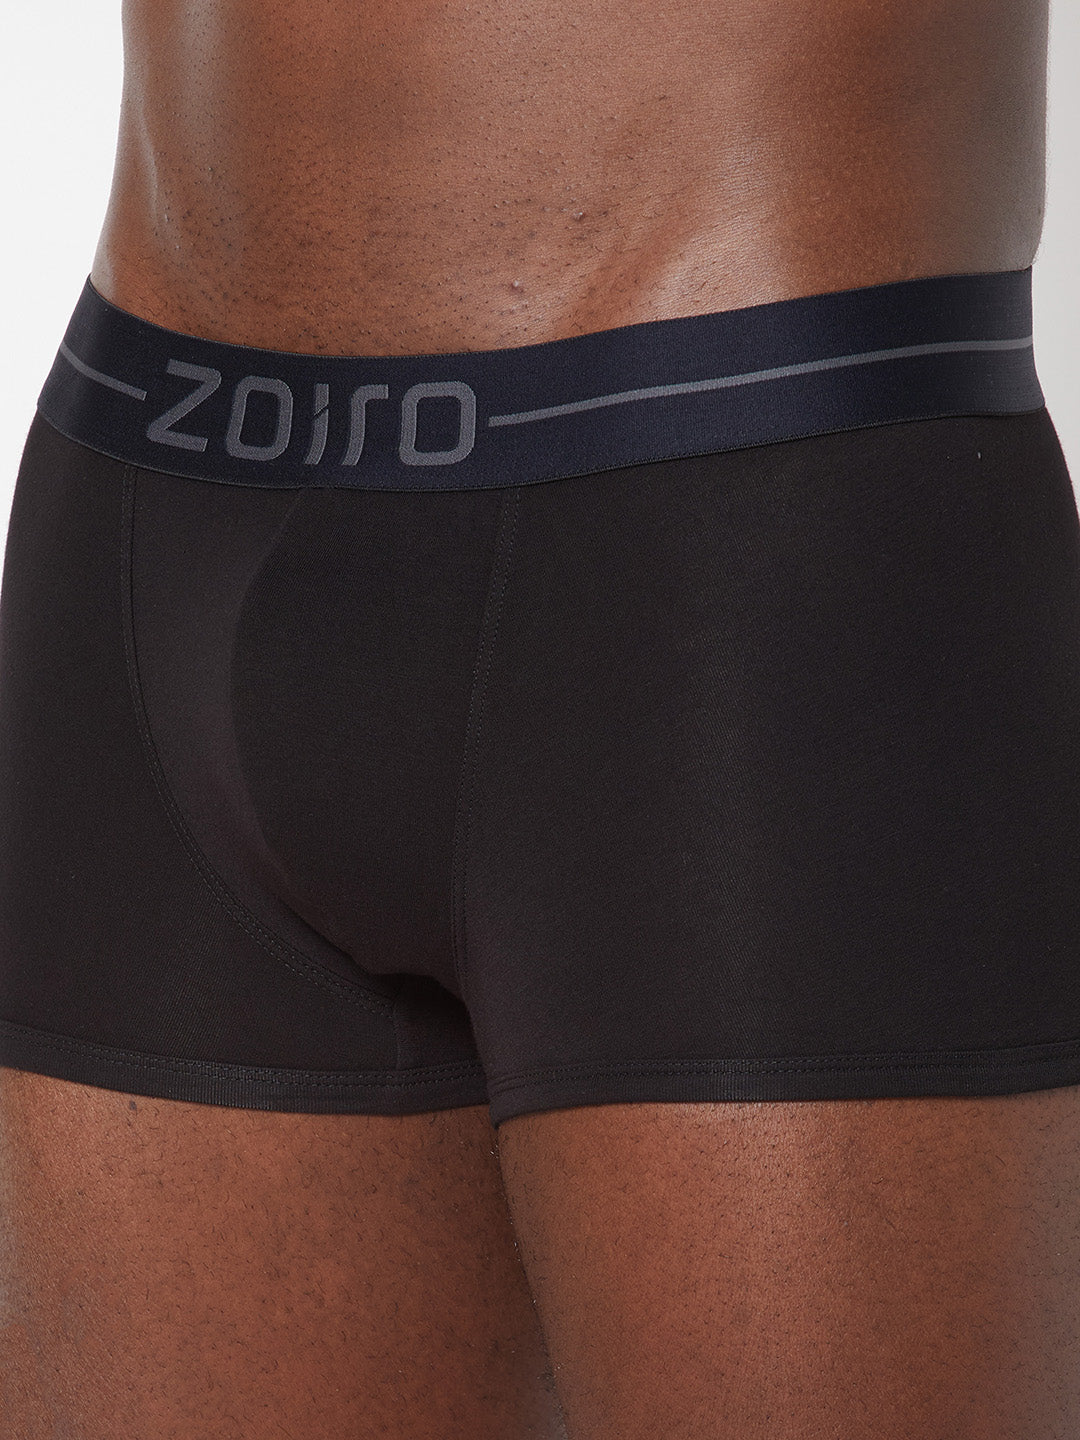 Zoiro Men&#39;s Cotton Spandex Softs Trunk - Black (Black Elastic Branding)